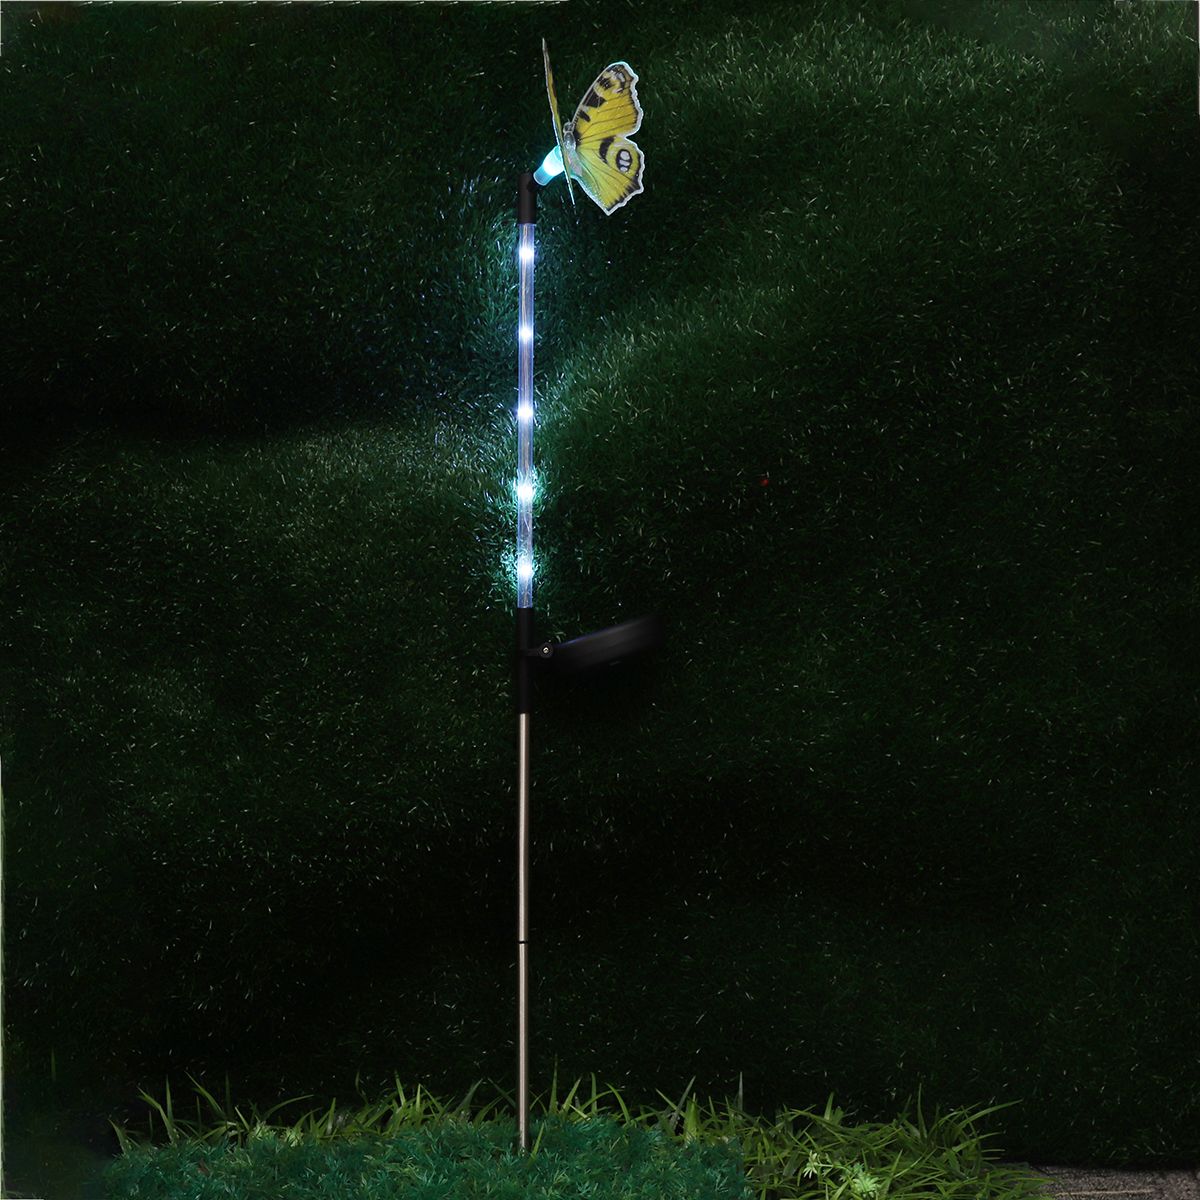 3PCS-Solar-Powered-Butterfly-LED-Lawn-Light-Stake-Garden-Yard-Outdoor-Landscape-Lamp-Decor-1690992